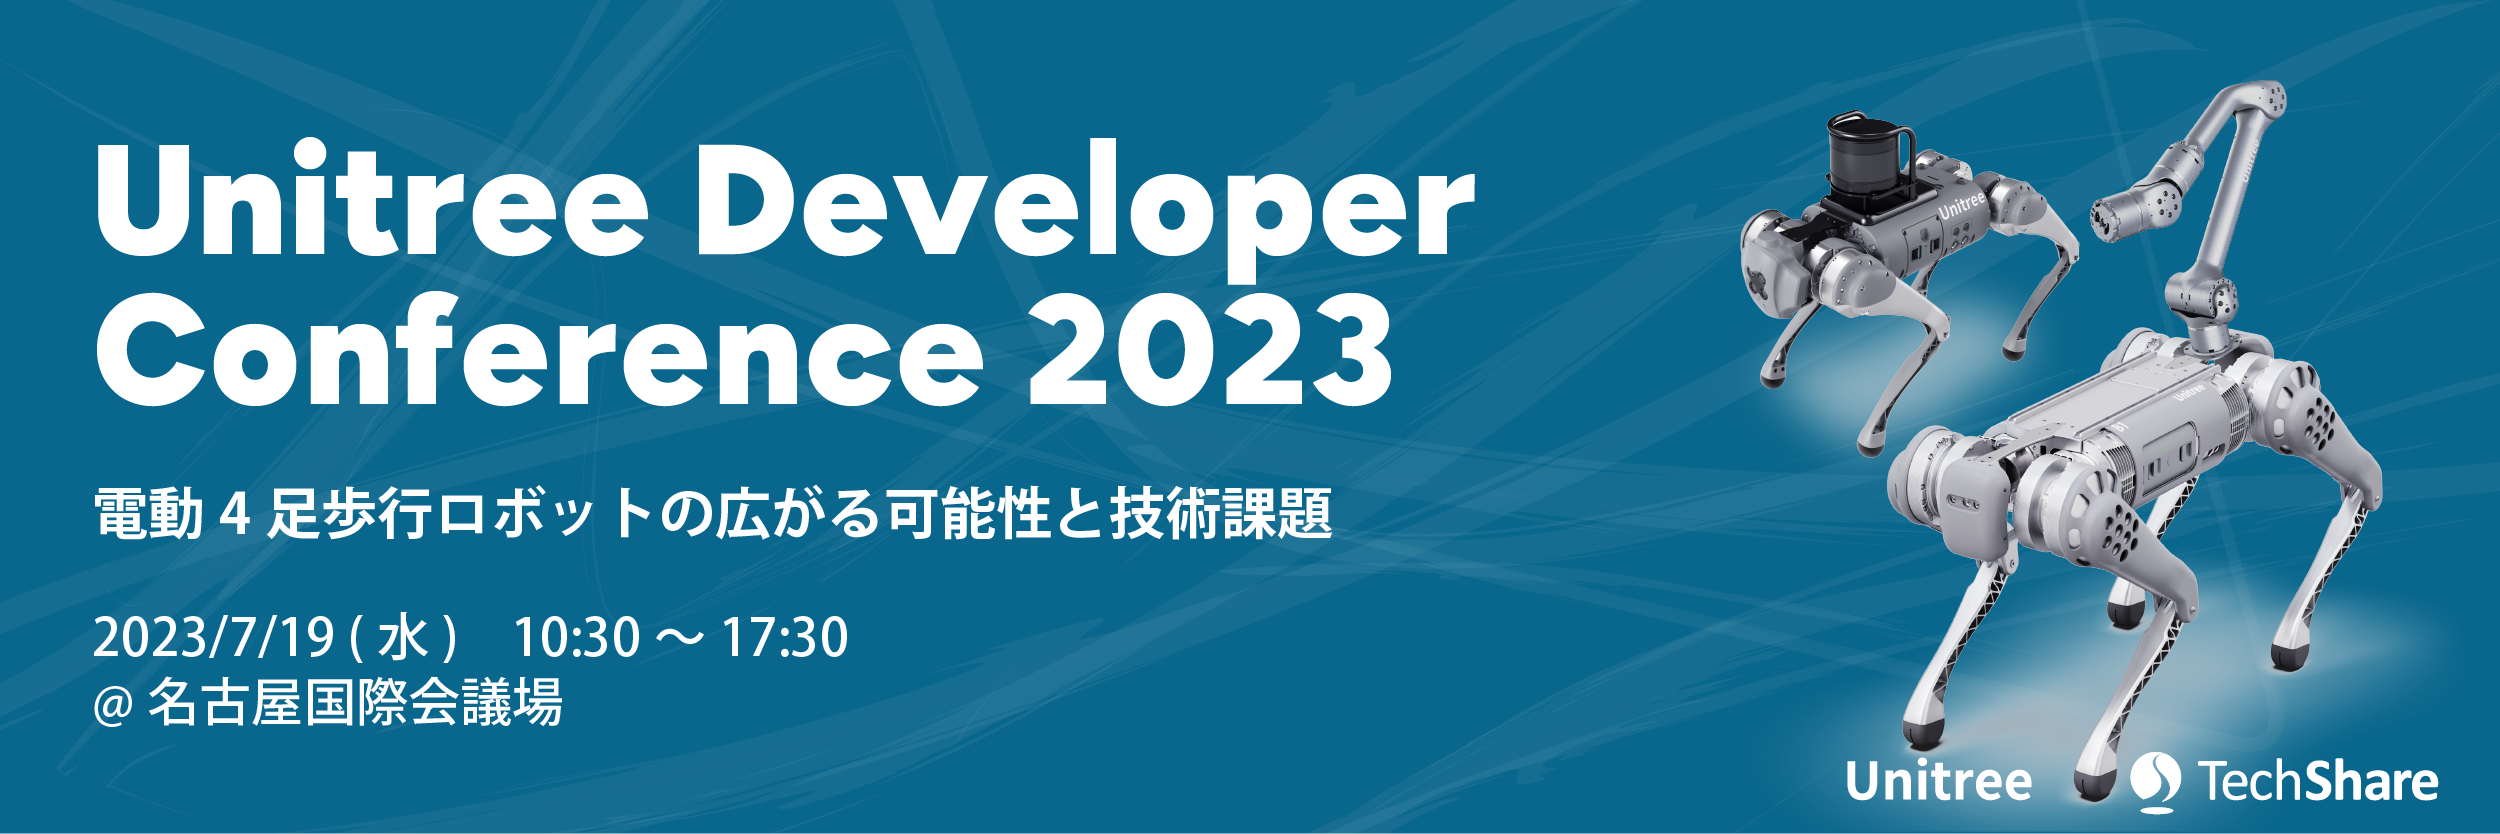 Unitree Developer Conference 2023のバナー画像